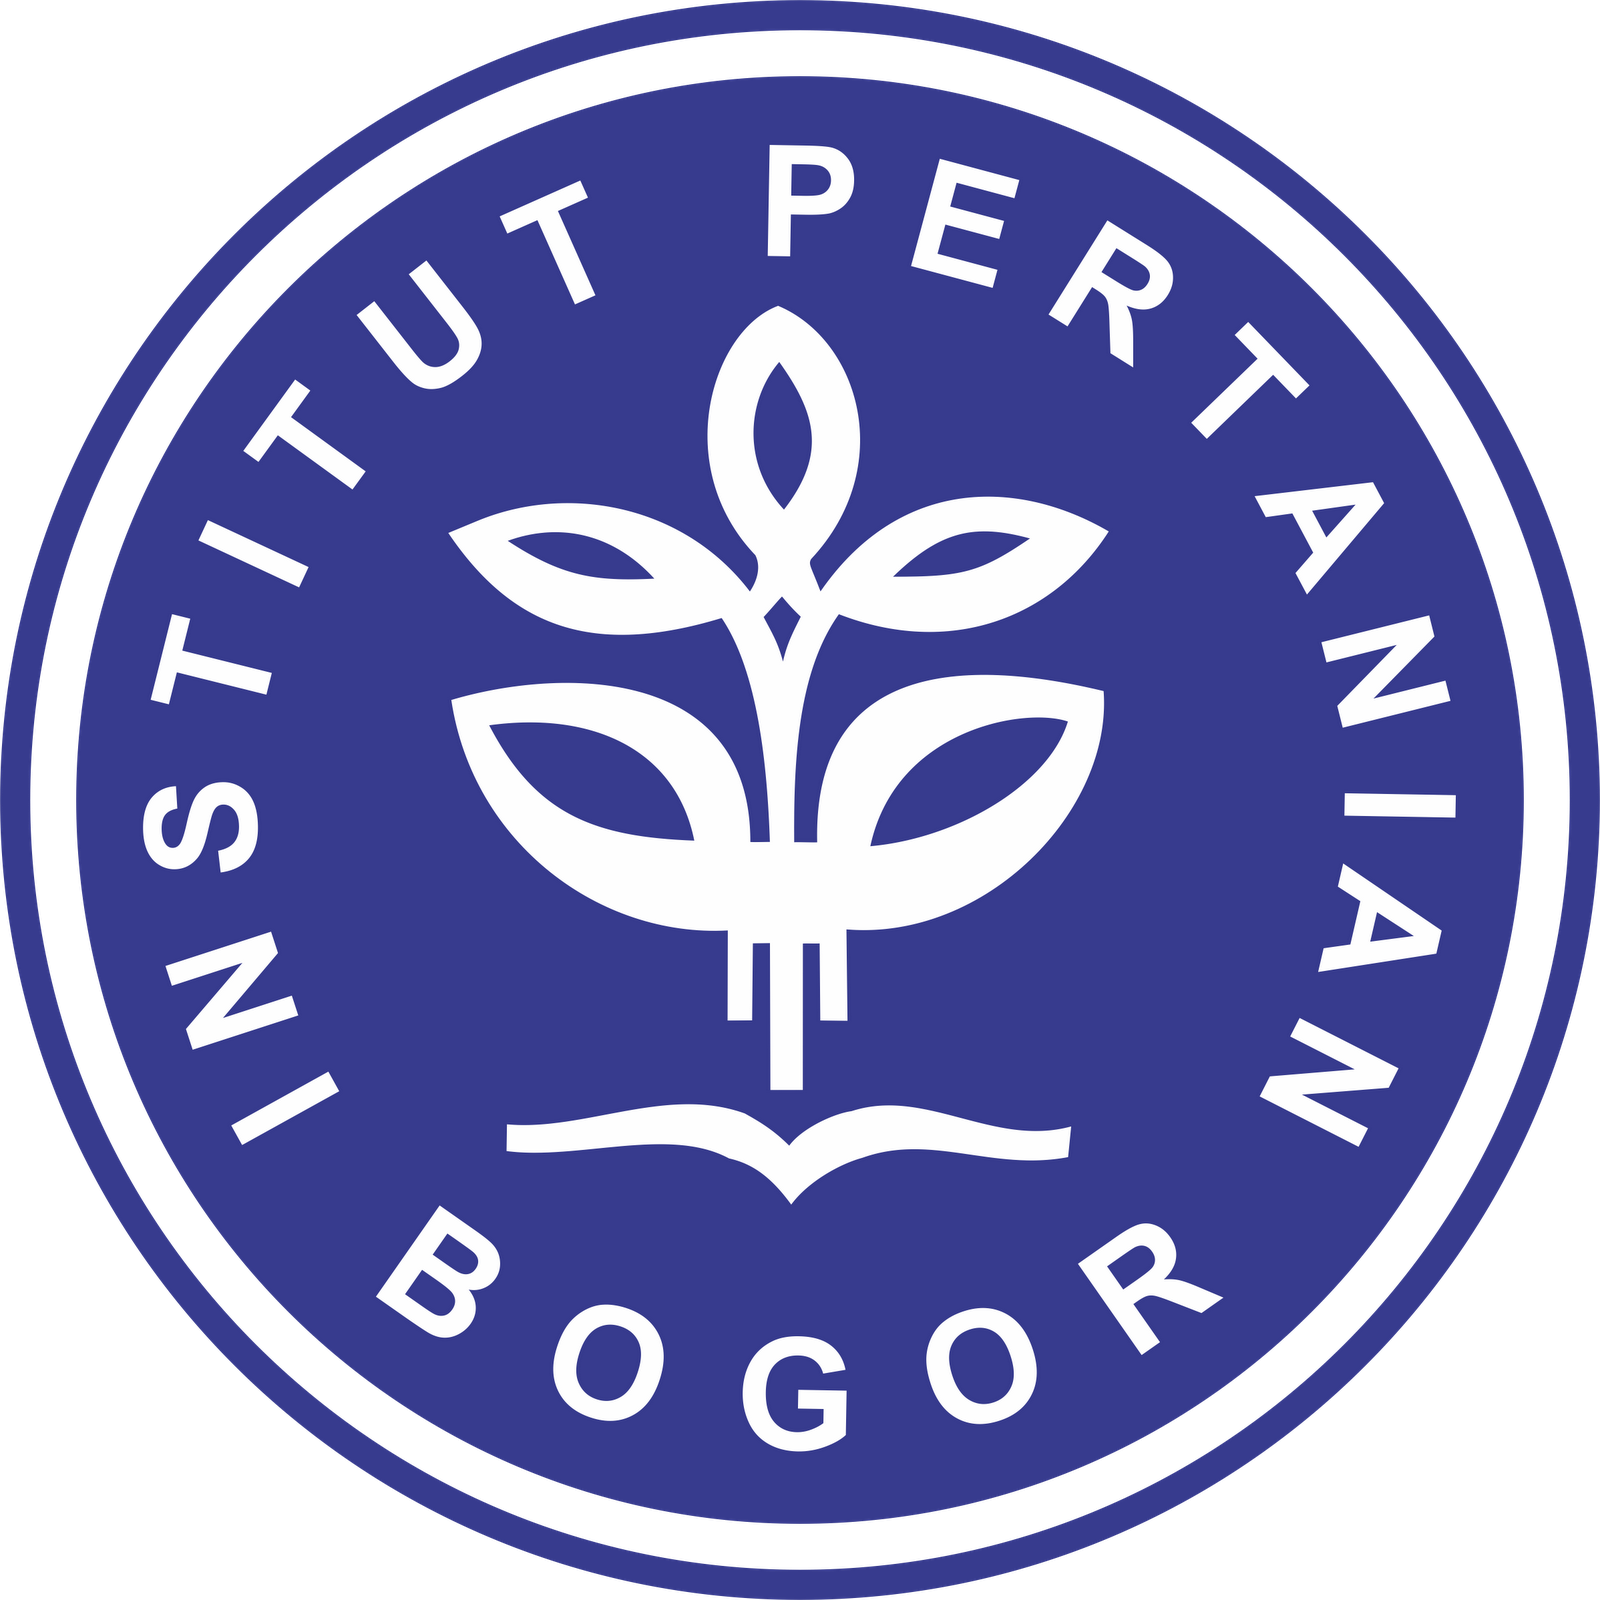  LOGO  IPB Gambar Logo 